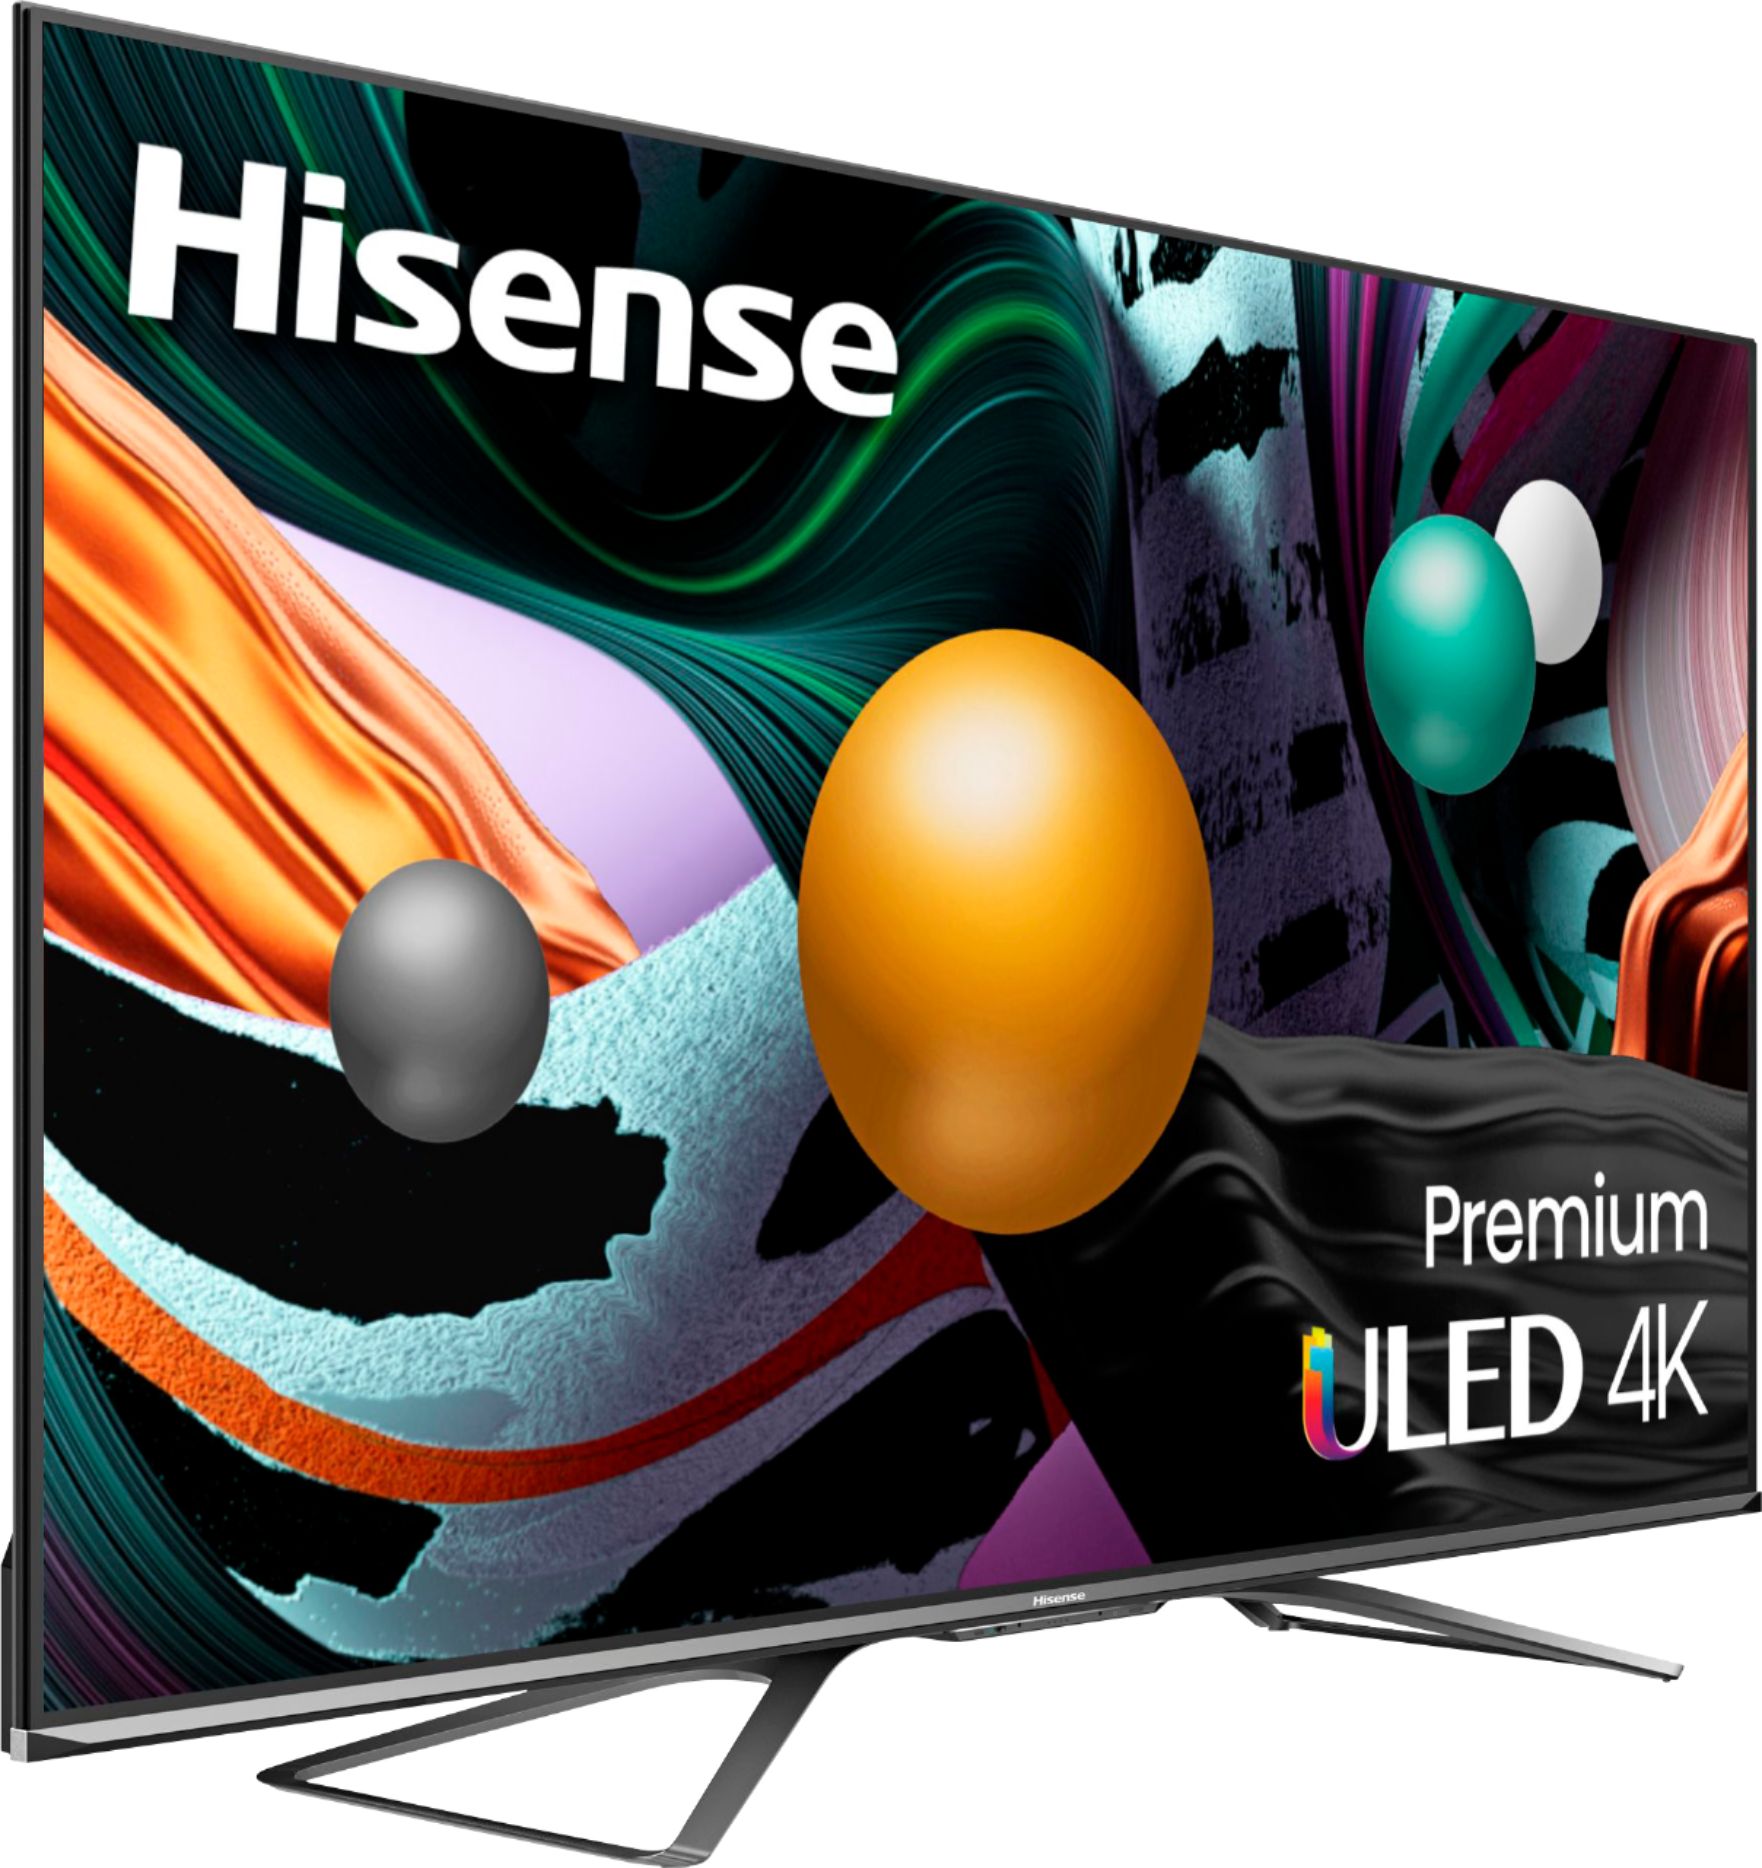 65" Hisense  U8G Series Quantum ULED 4K Android TV @ Best Buy $999.99